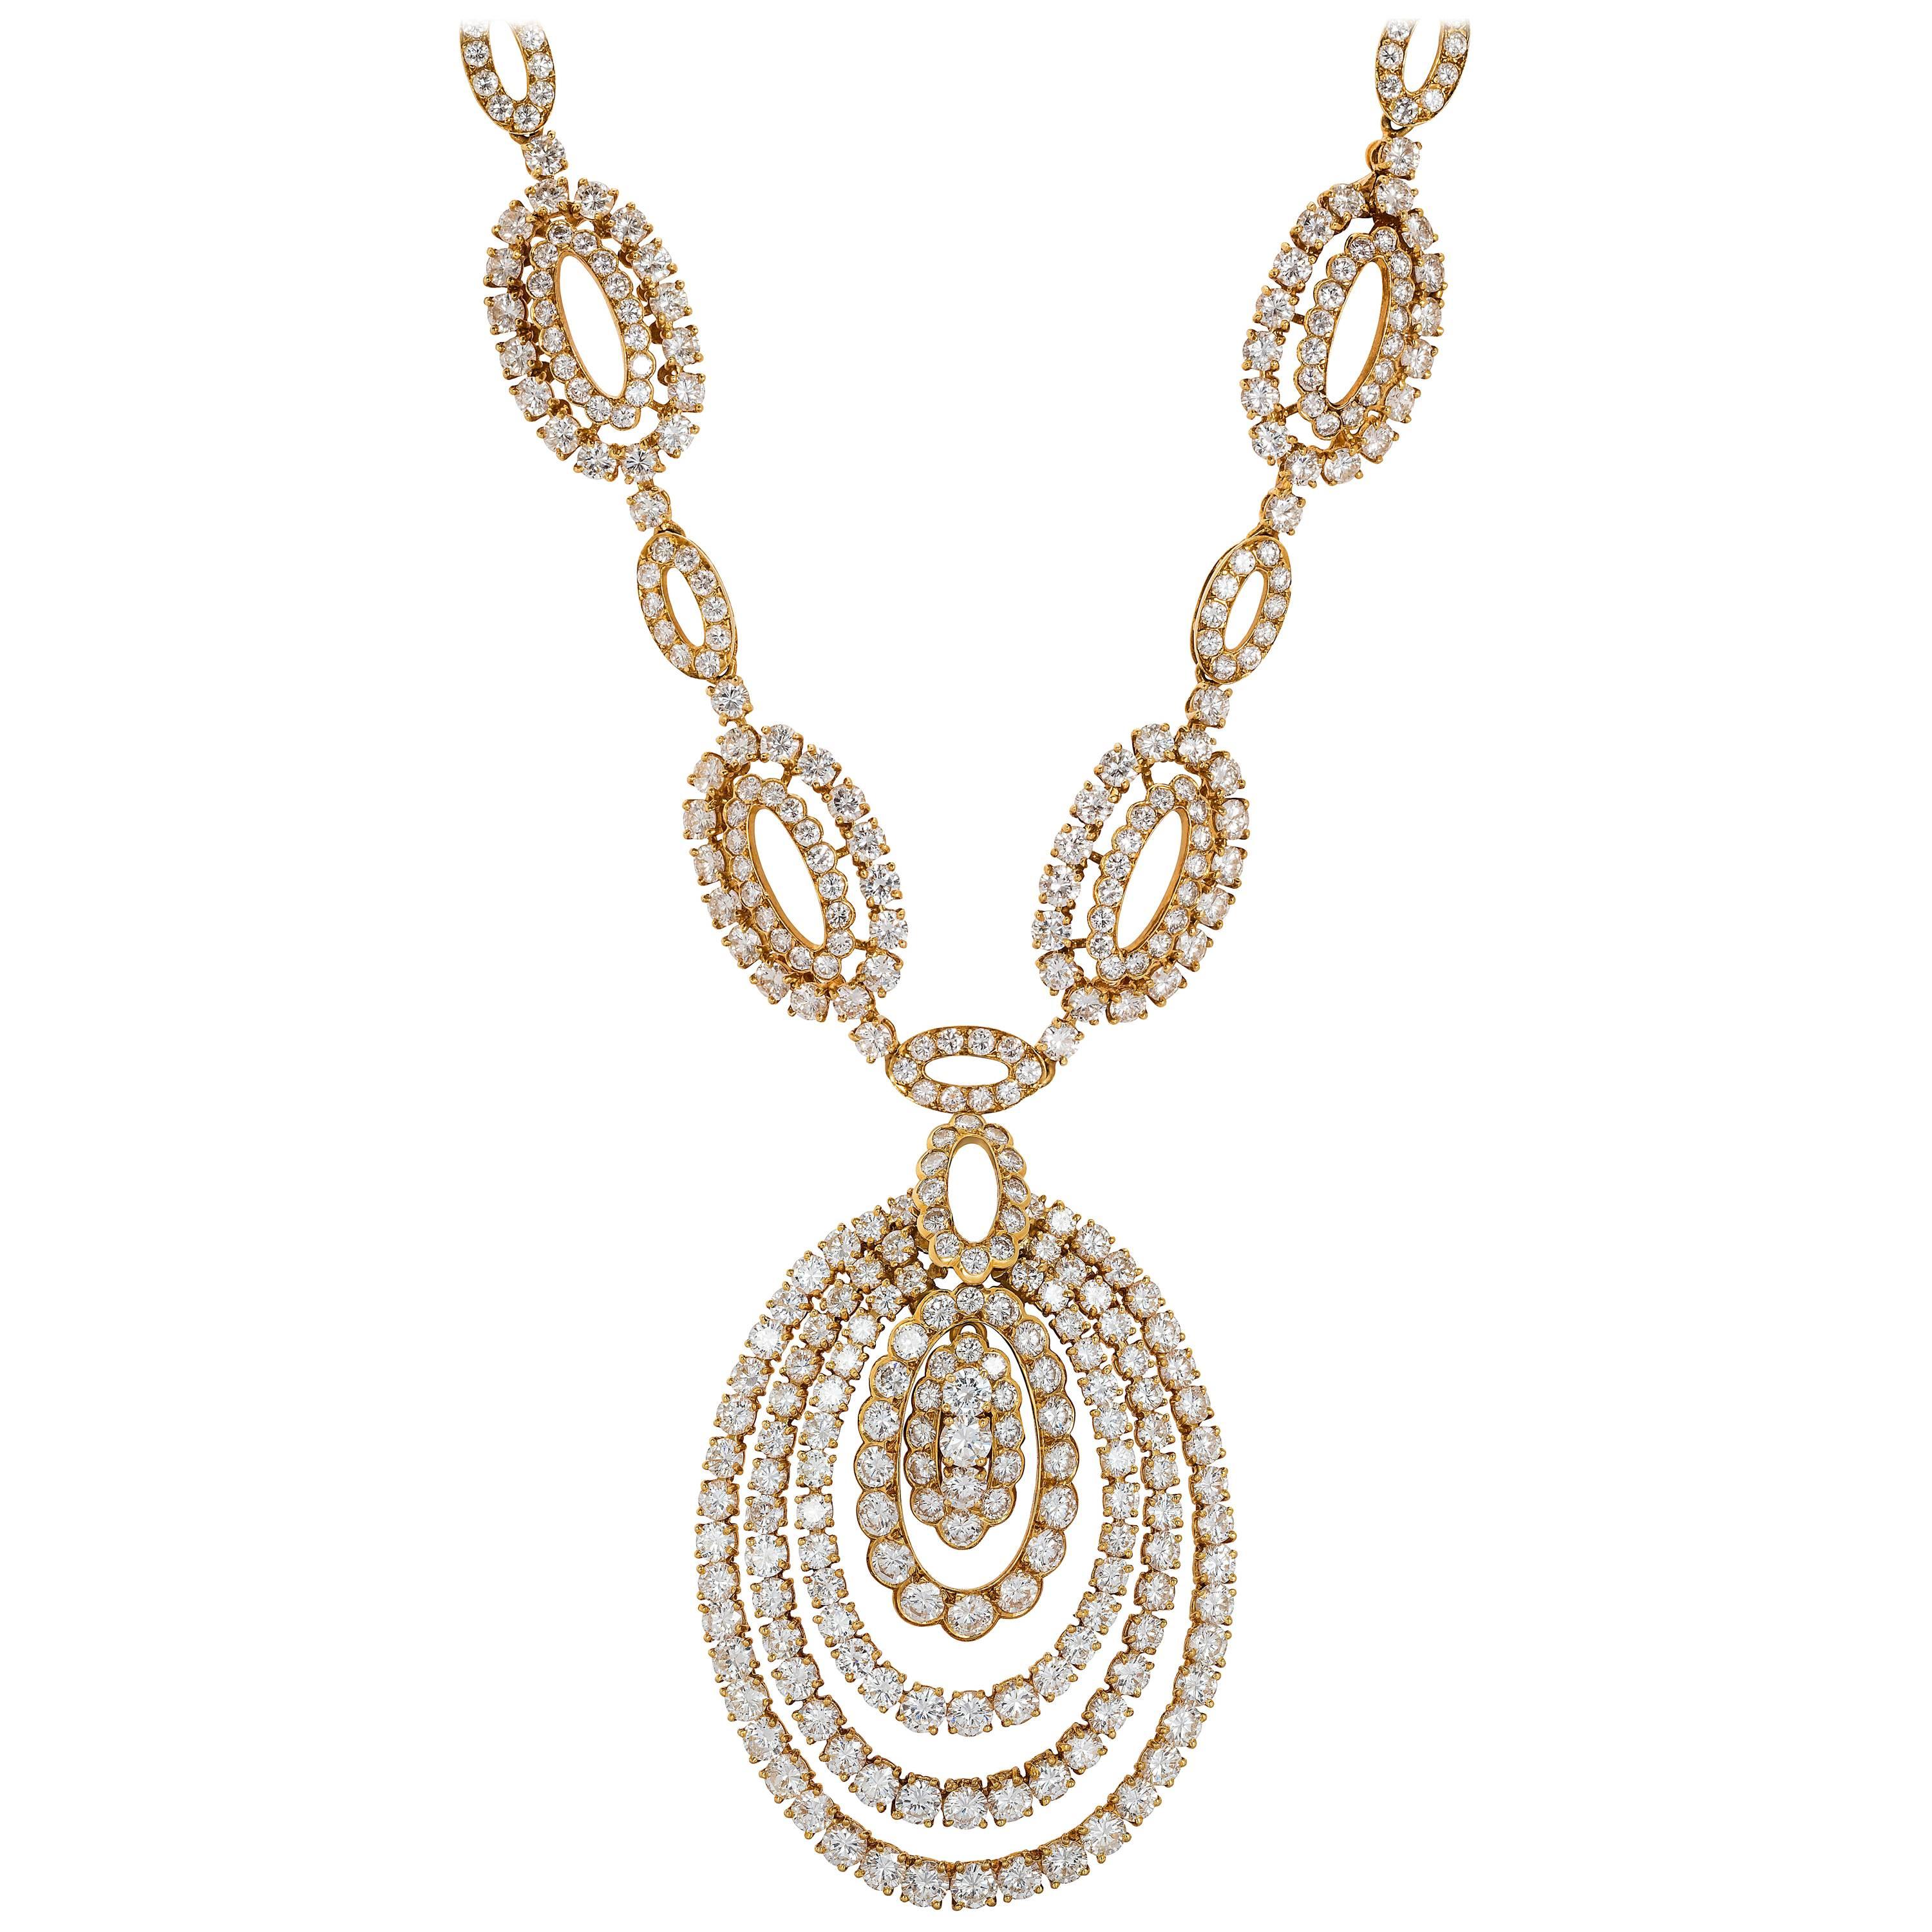 Circa 1970 Van Cleef & Arpels Diamond Yellow Gold Necklace Earrings Parure Suite